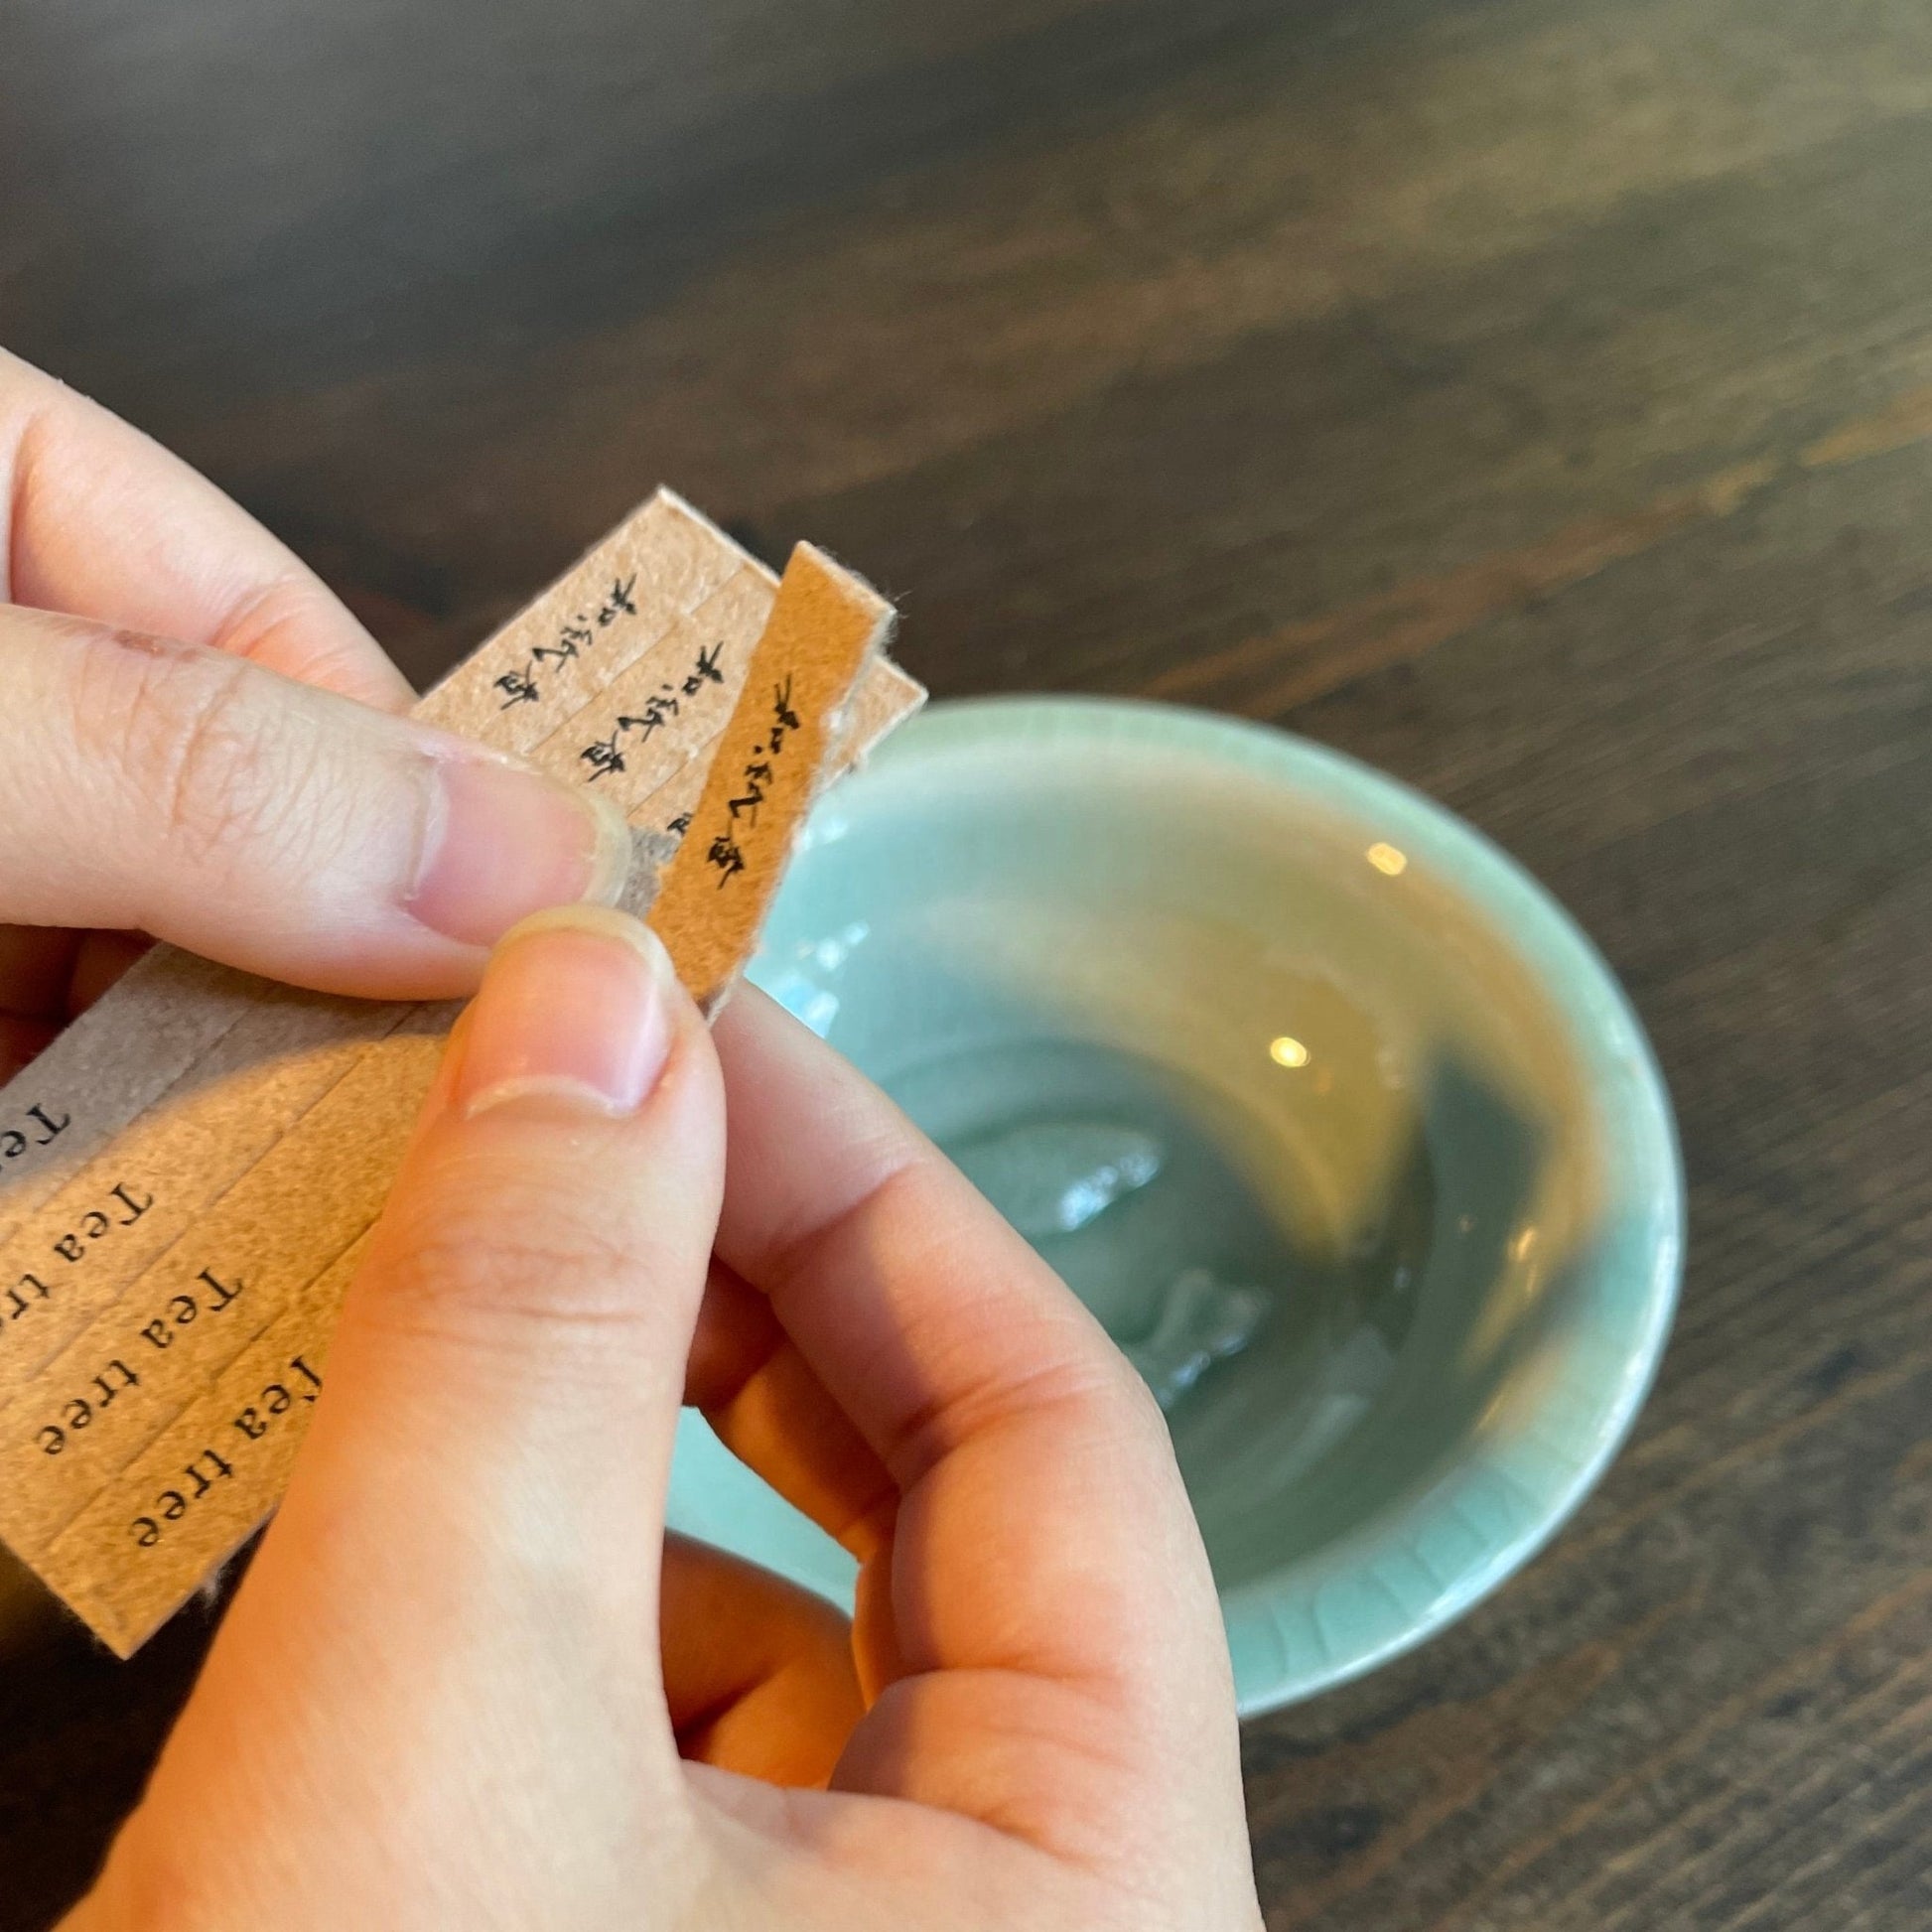 Washikou Washi Paper Incense from Awajishima — Lavender